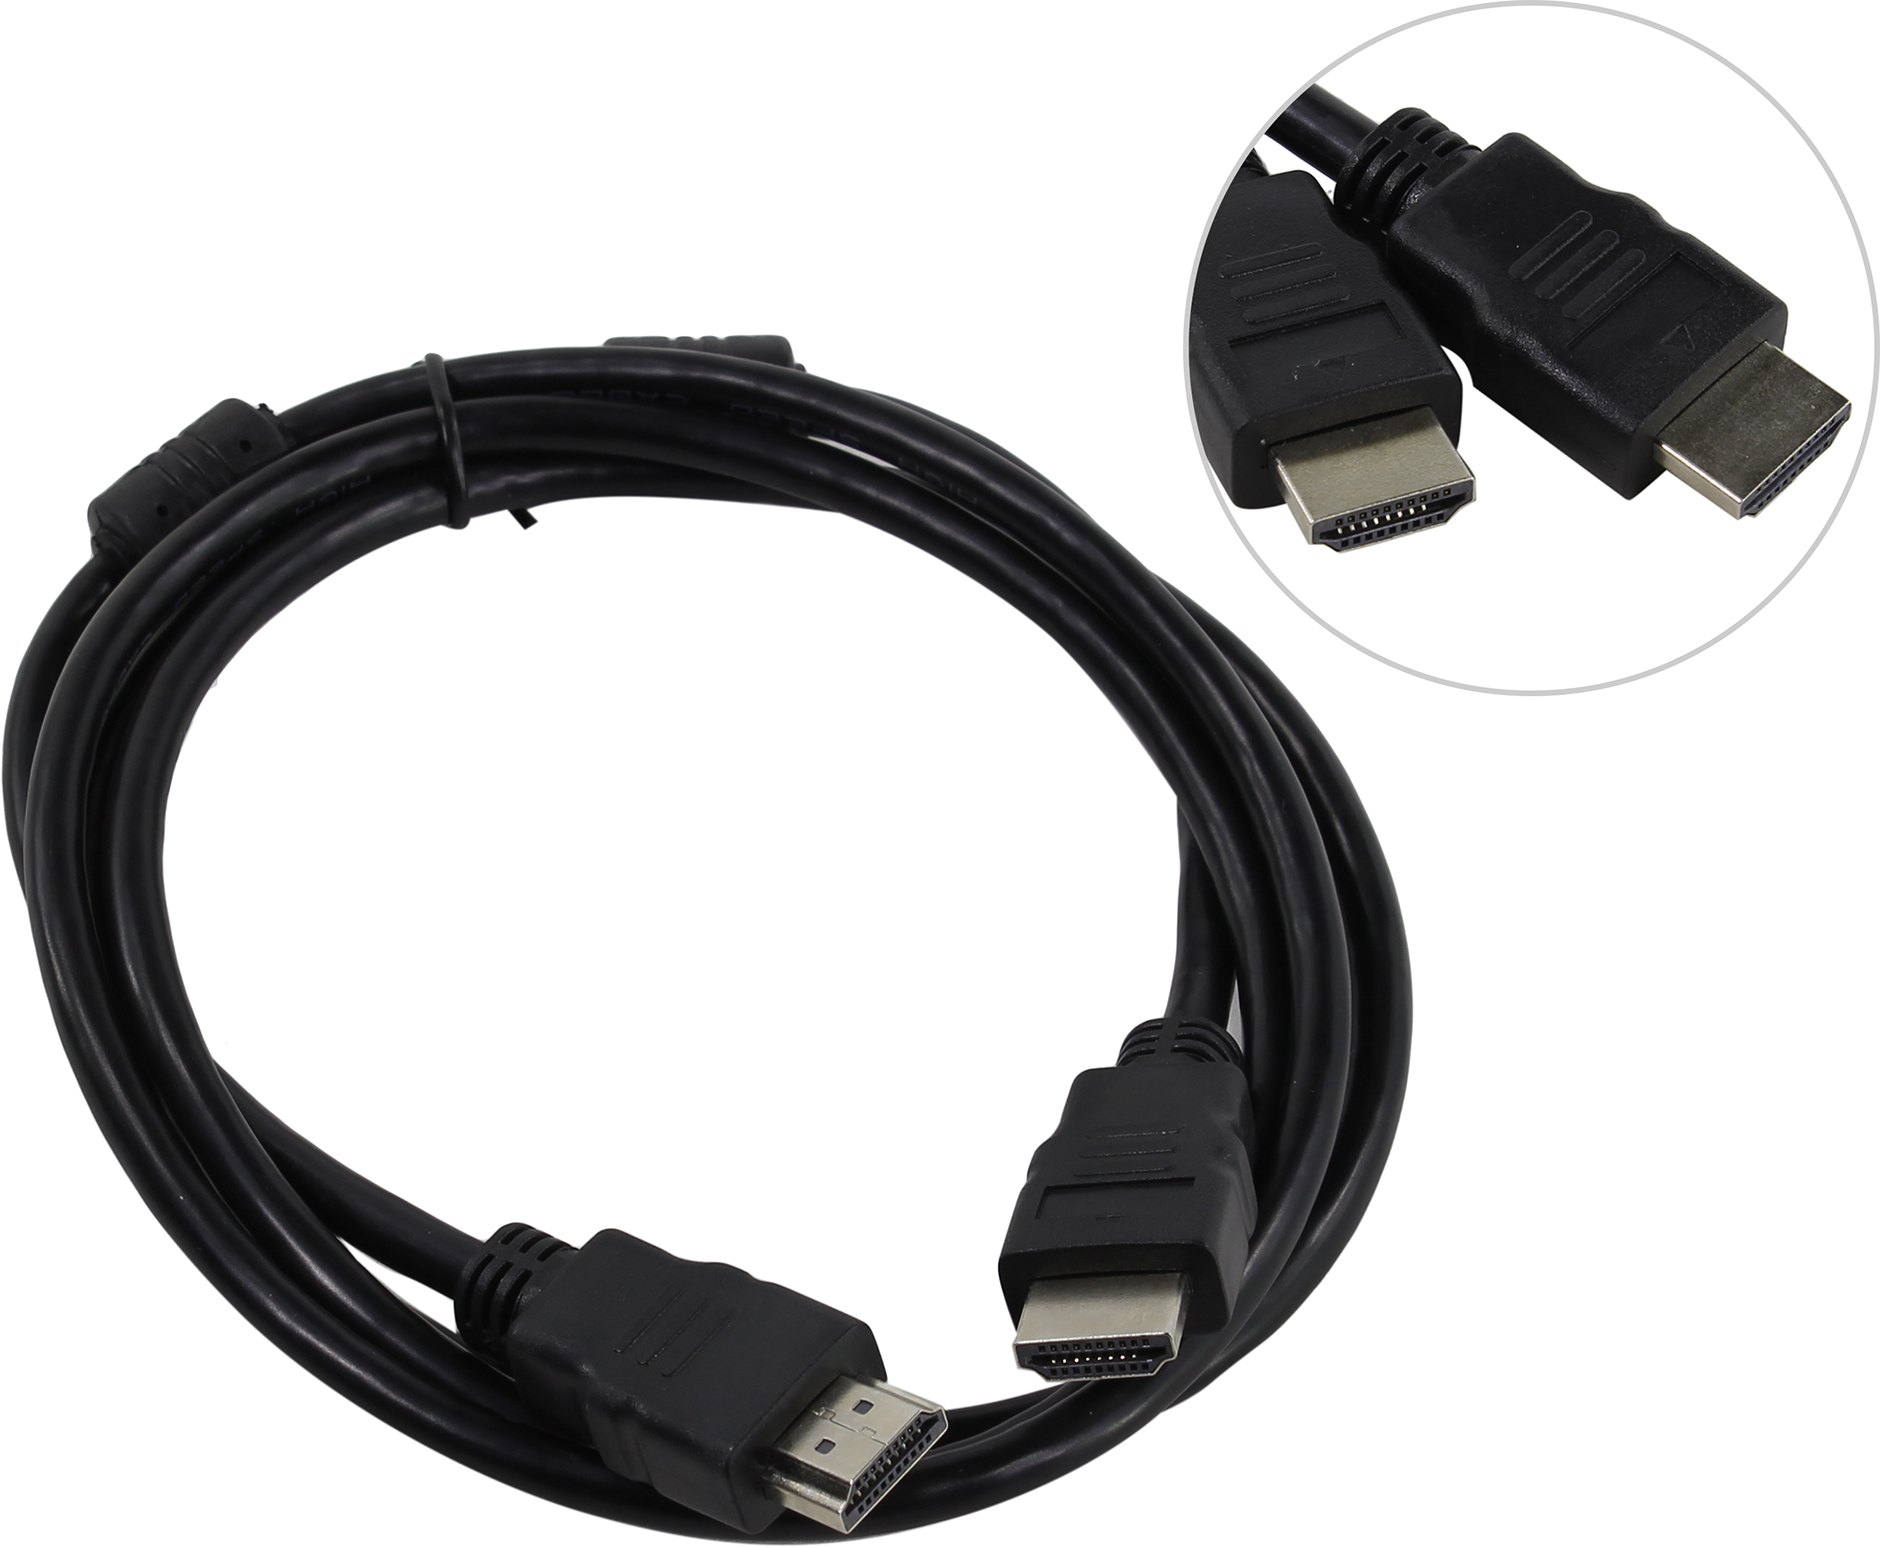  Video HDMI-HDMI (19pin to 19pin), 1.5 m ver1.4, SmartBuy K352-15-2